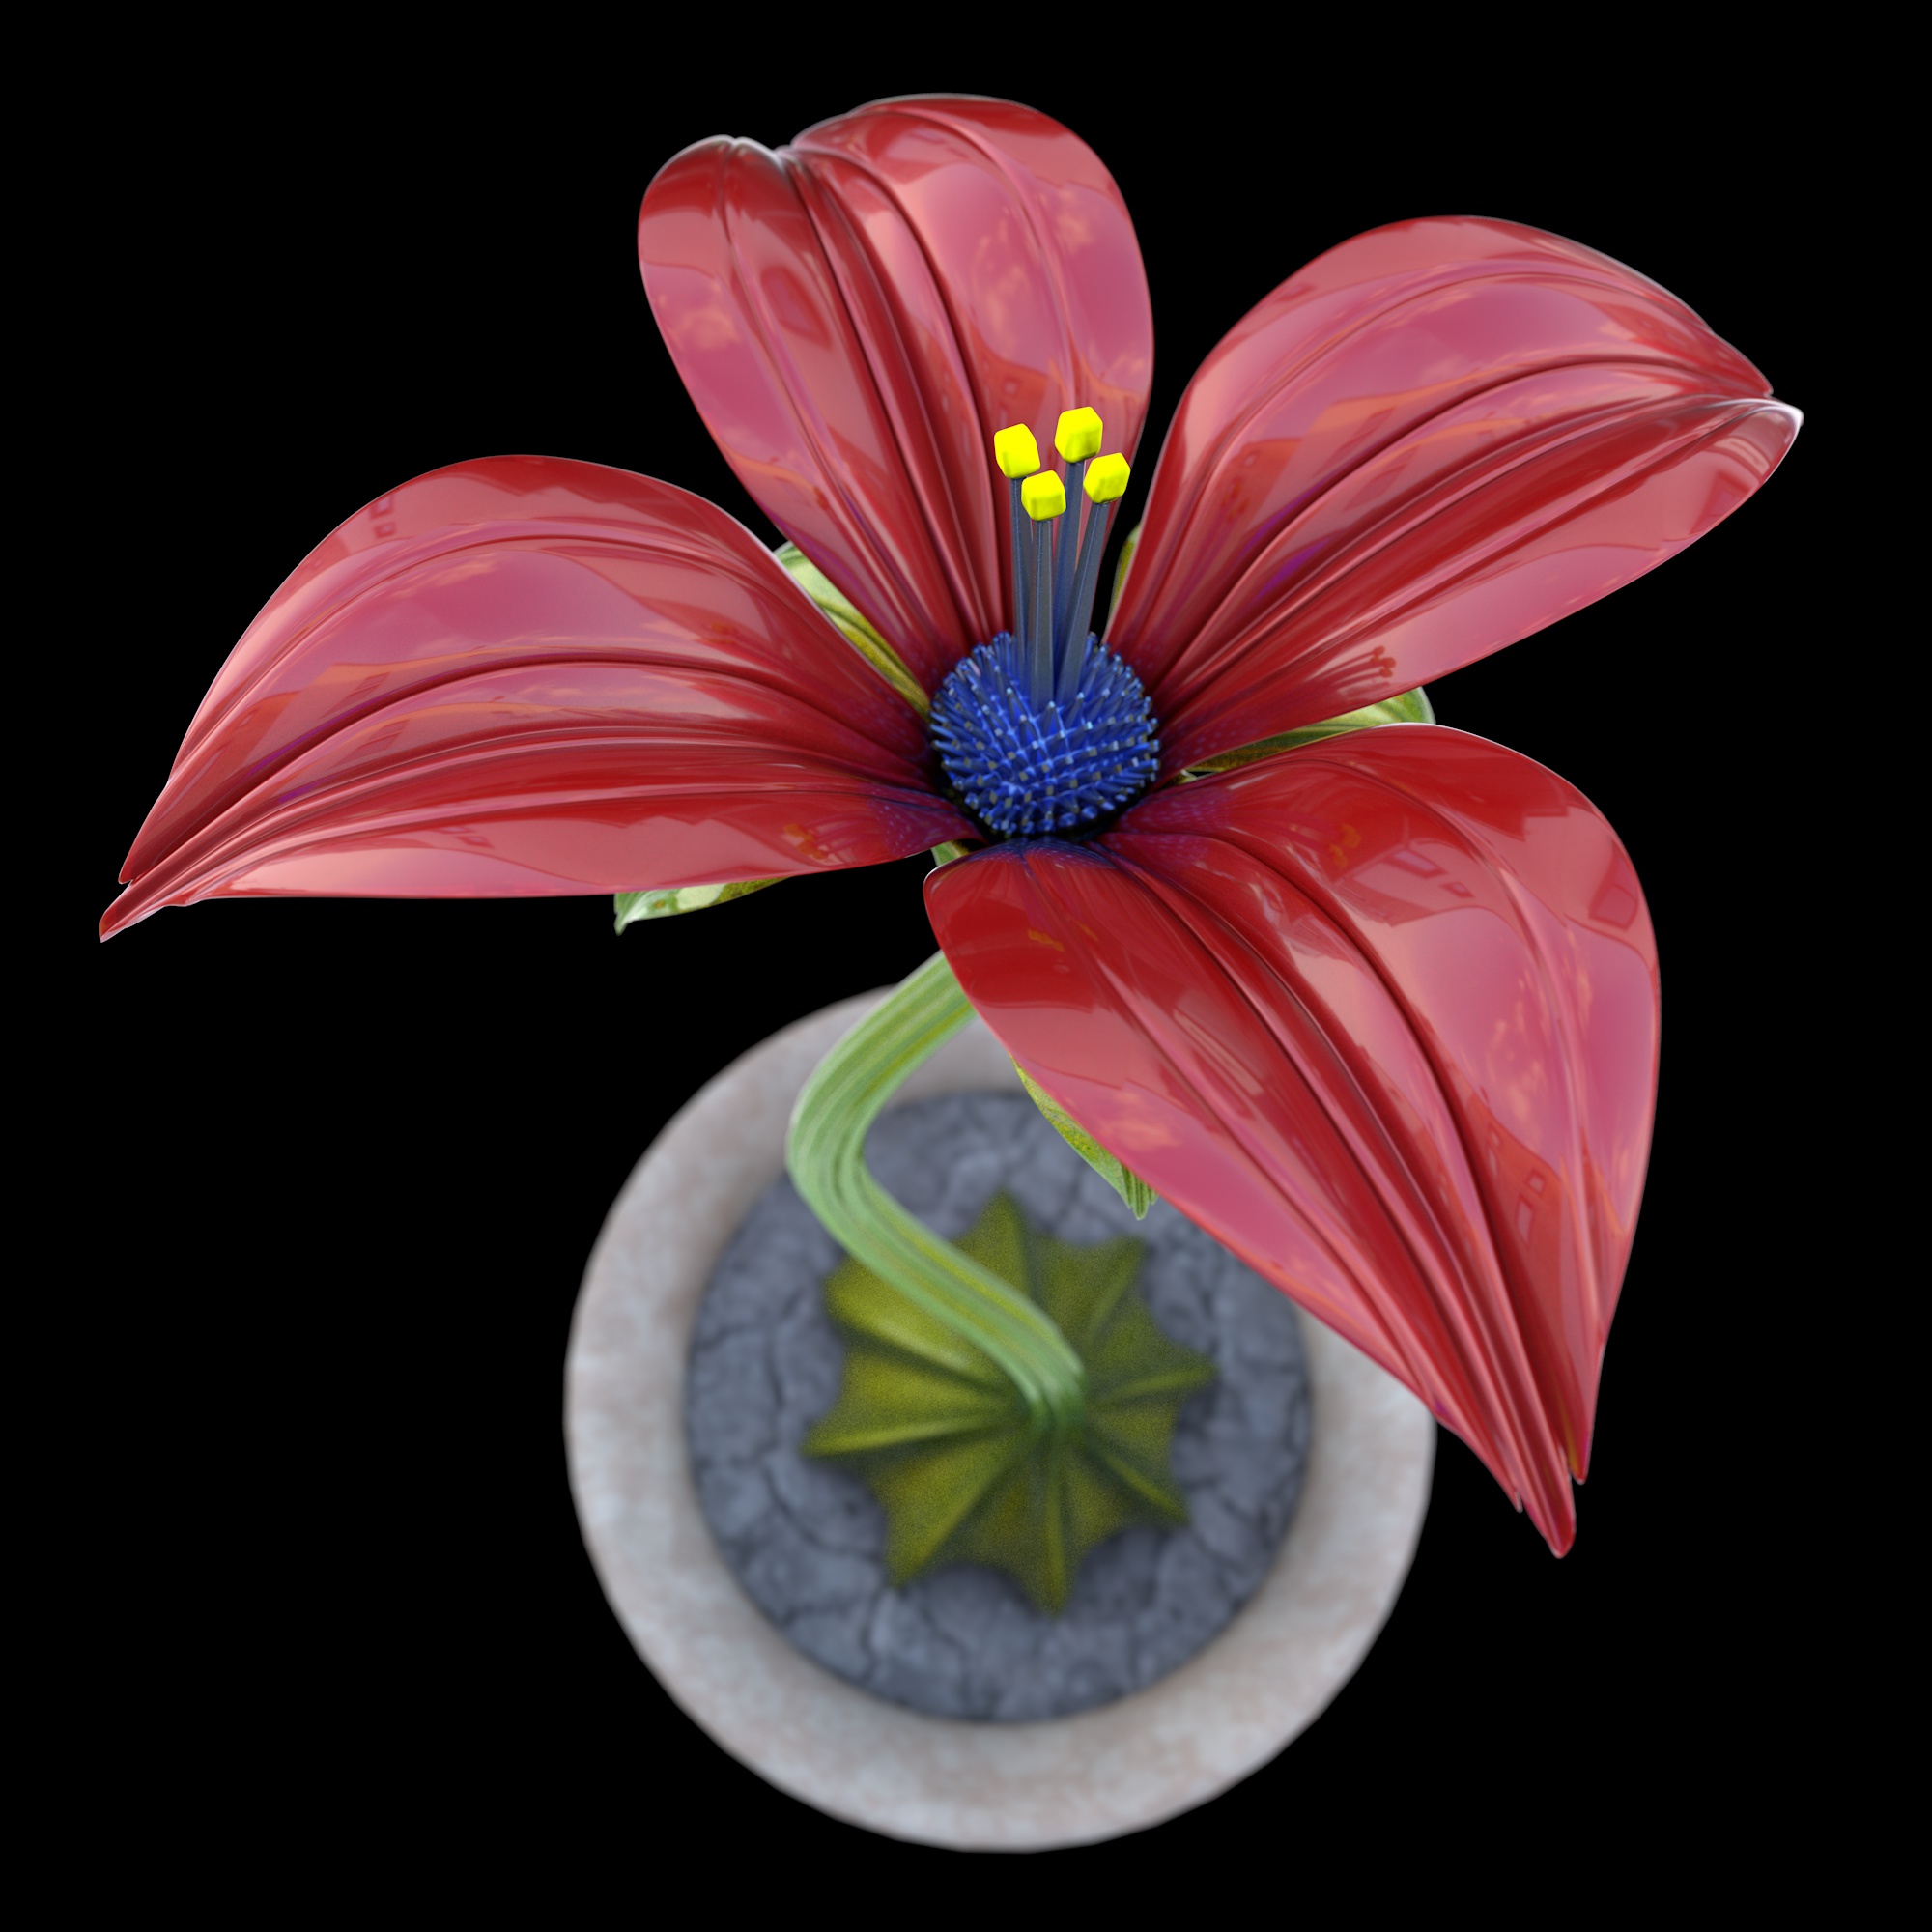 Pandora flower 2...